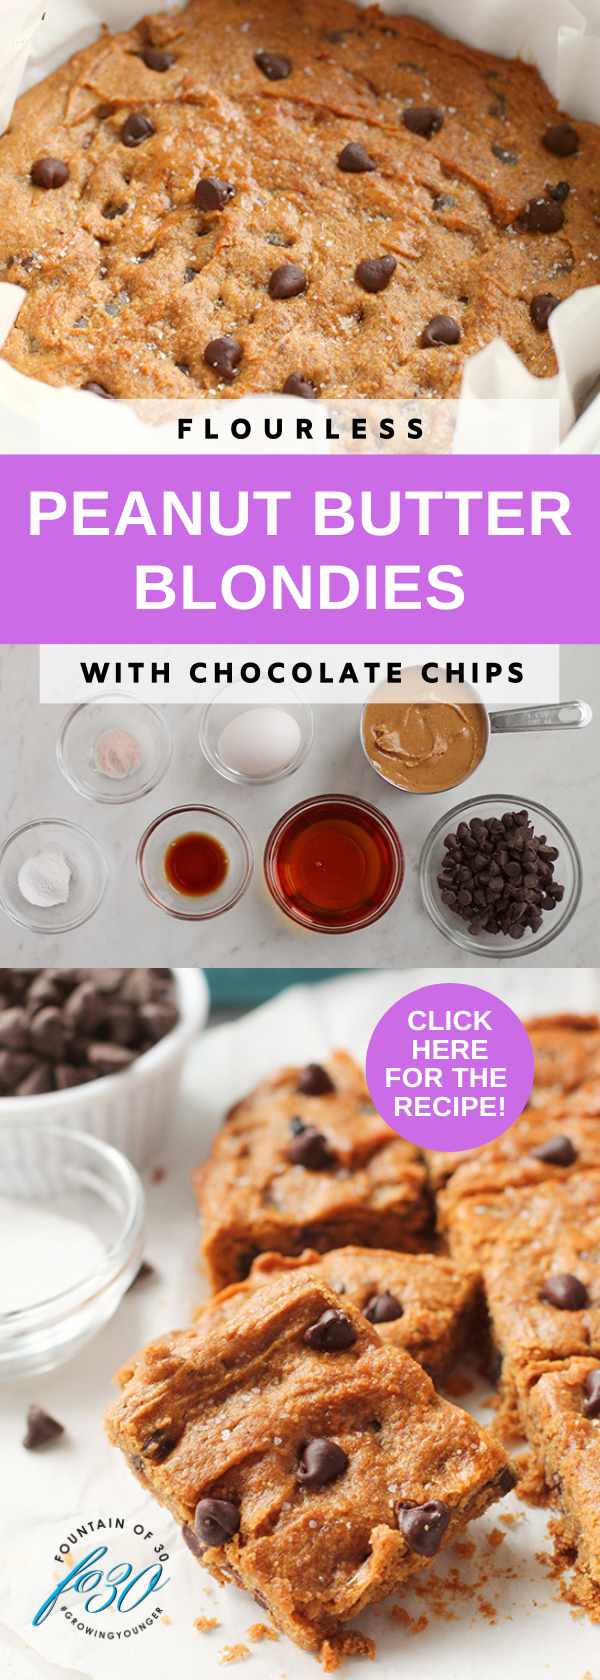 flourless peanut butter chocolate chip blondies fountainof30